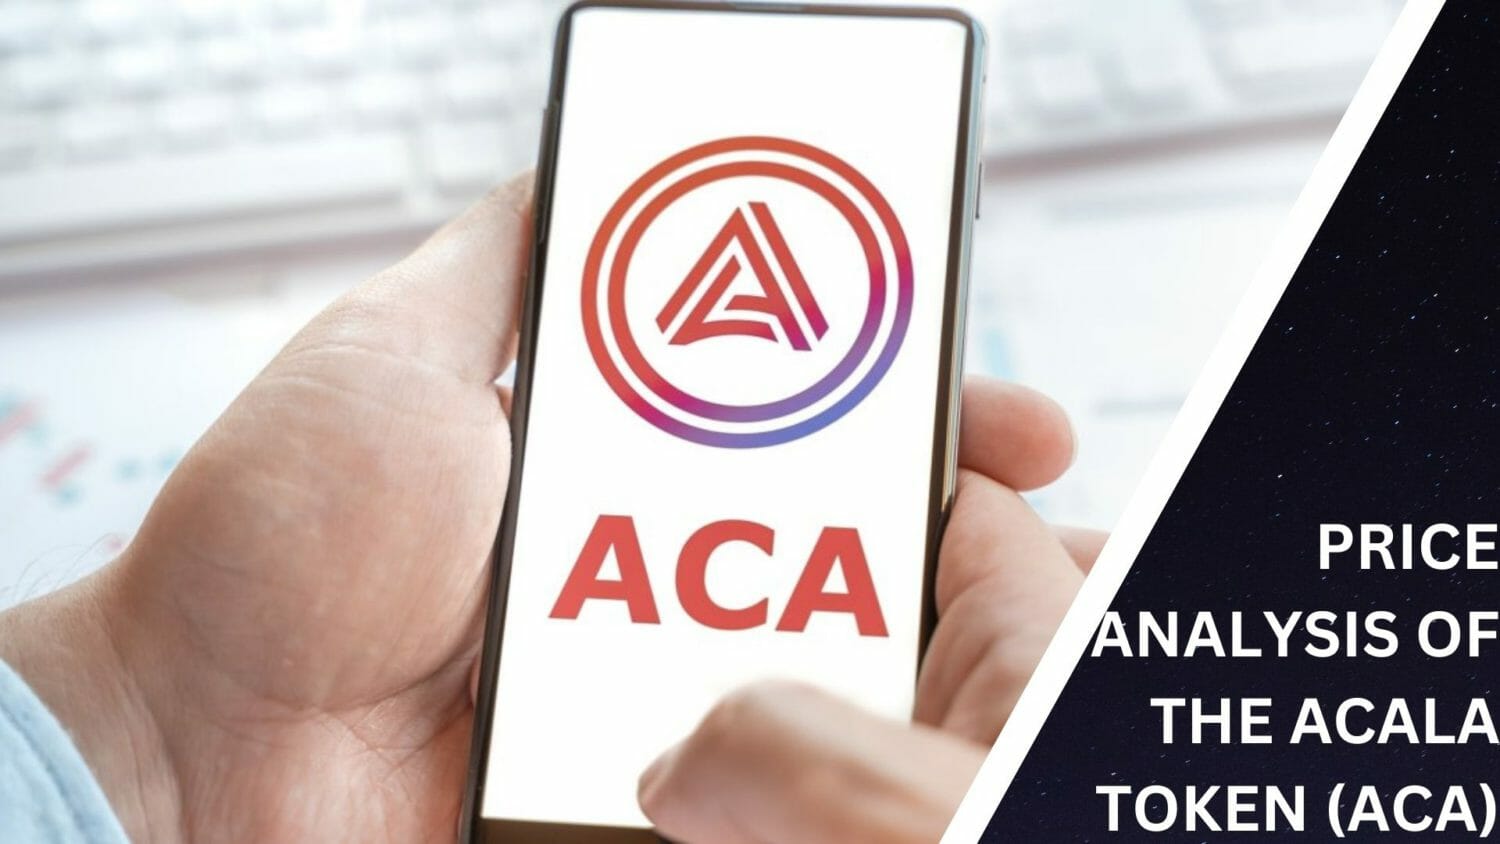 Price Analysis Of The Acala Token (Aca)